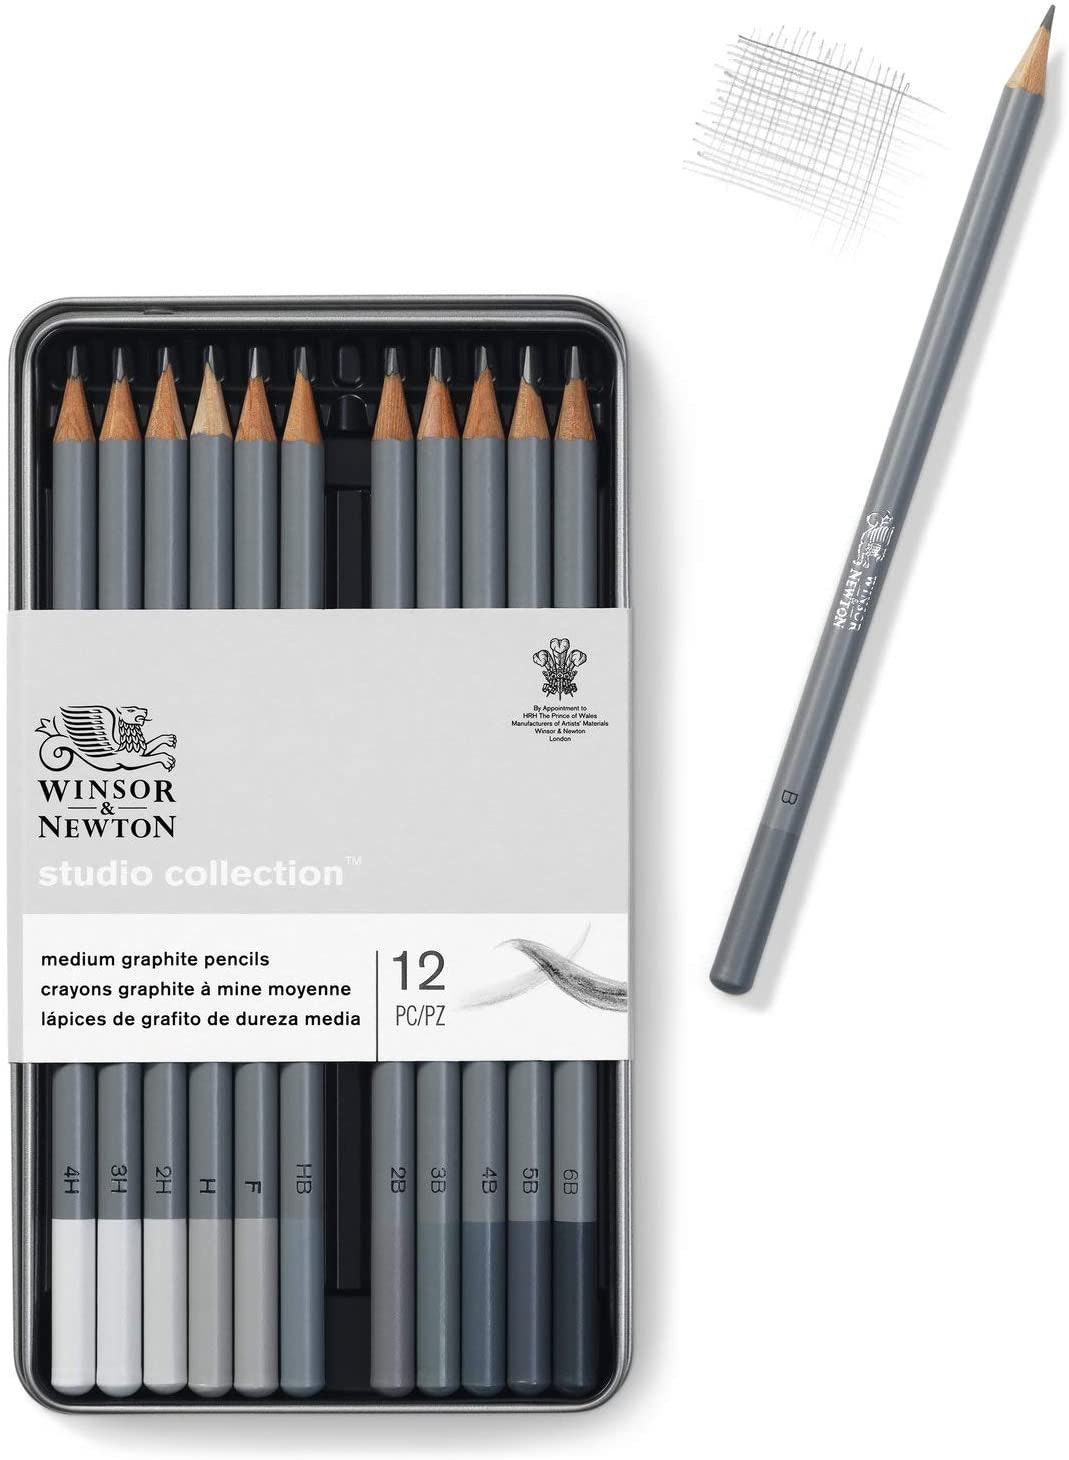 Winsor & Newton Studio Collection Graphite Pencil Set of 12 Medium